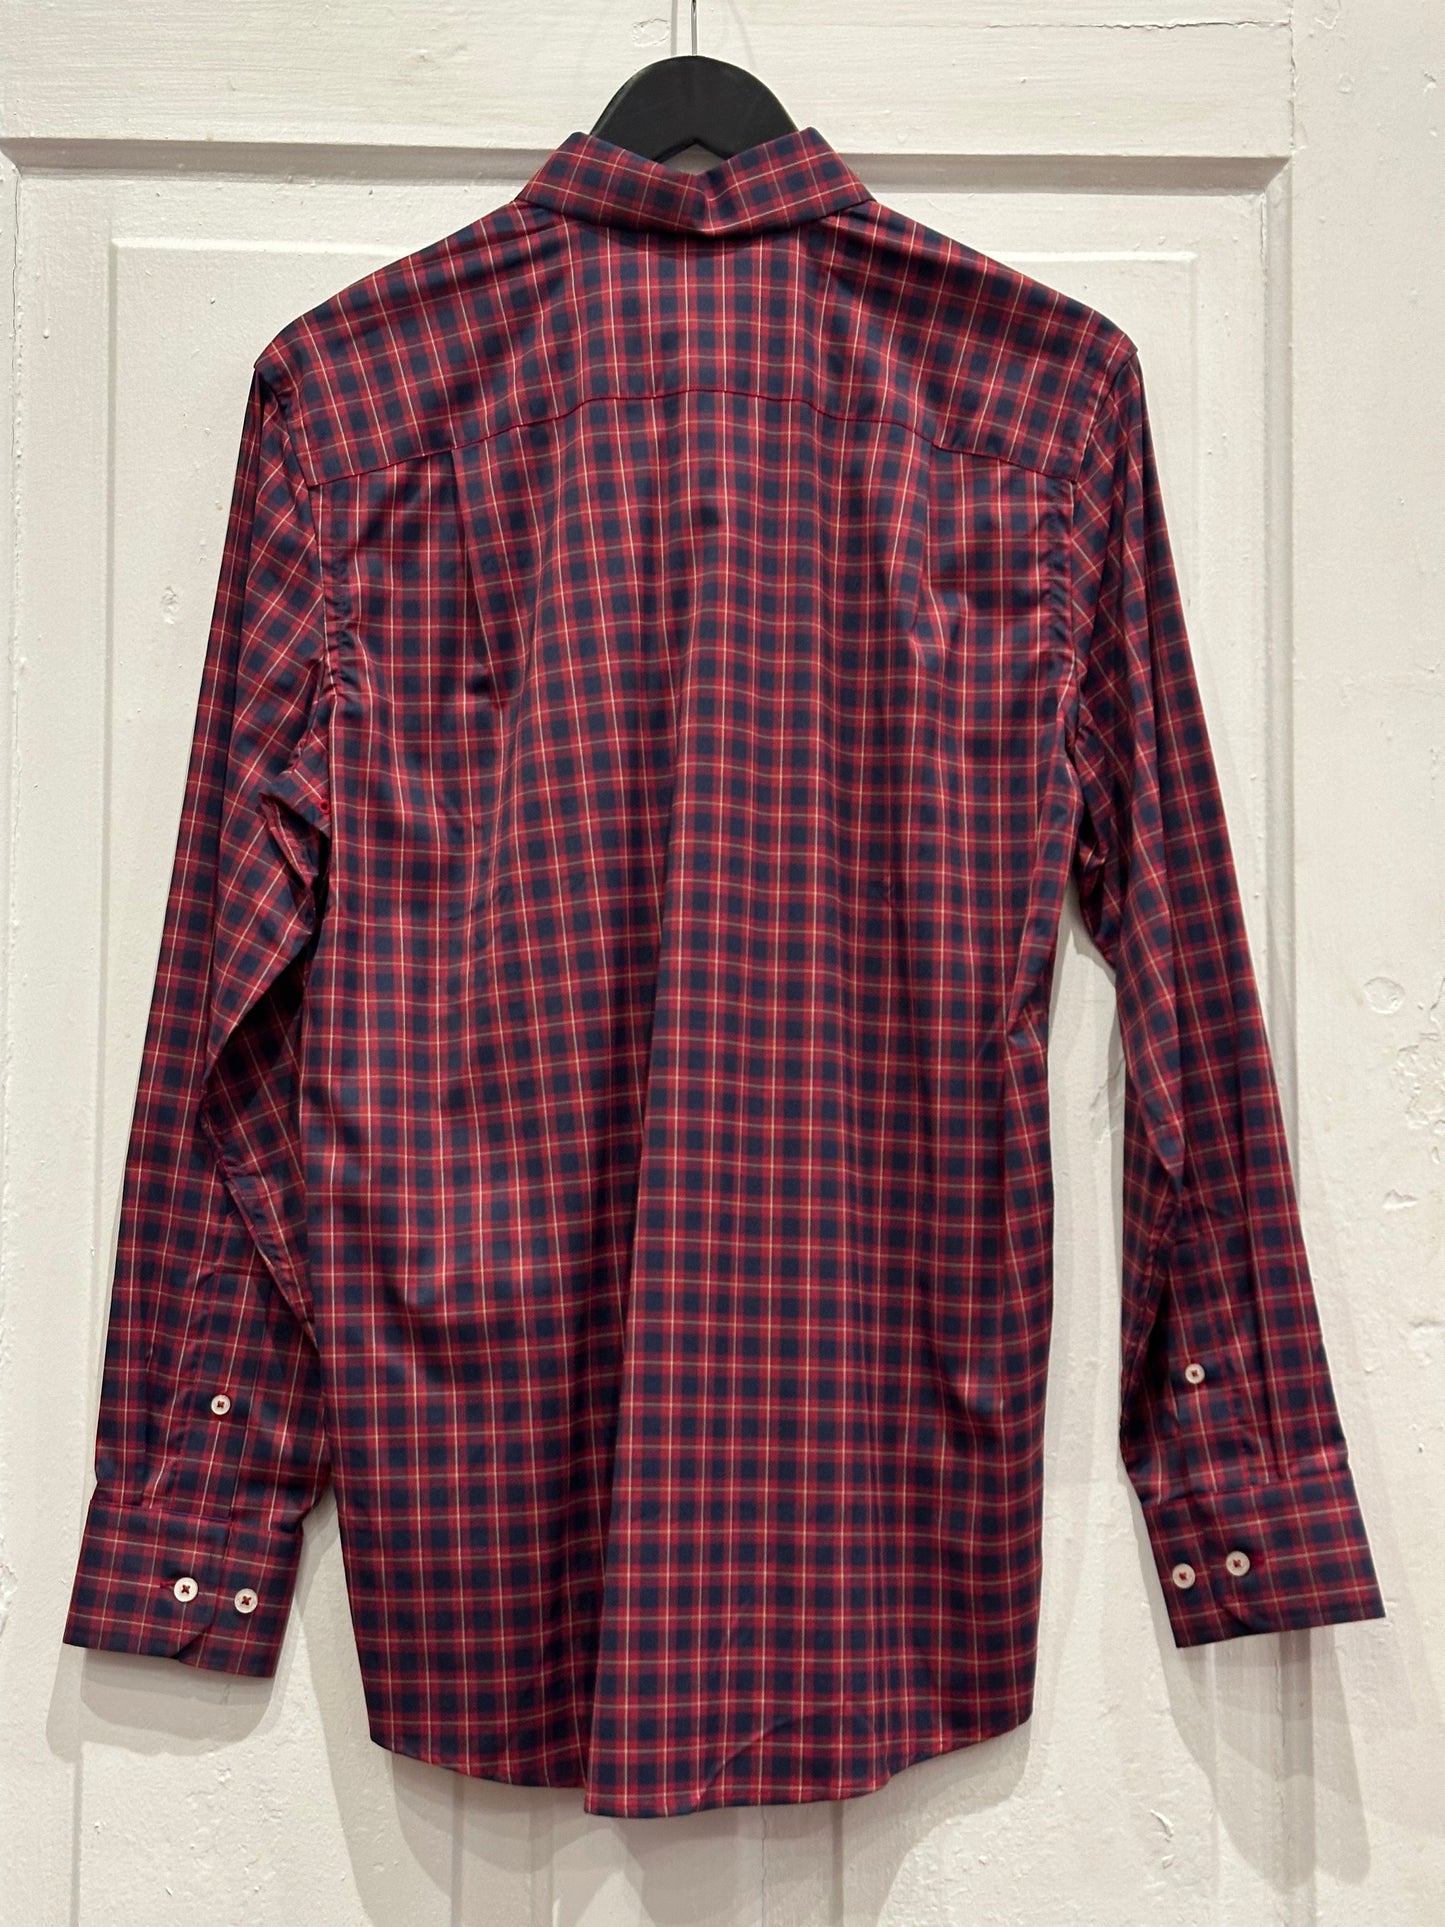 Glenbrook Plaid Sport Shirt (Dark Red)